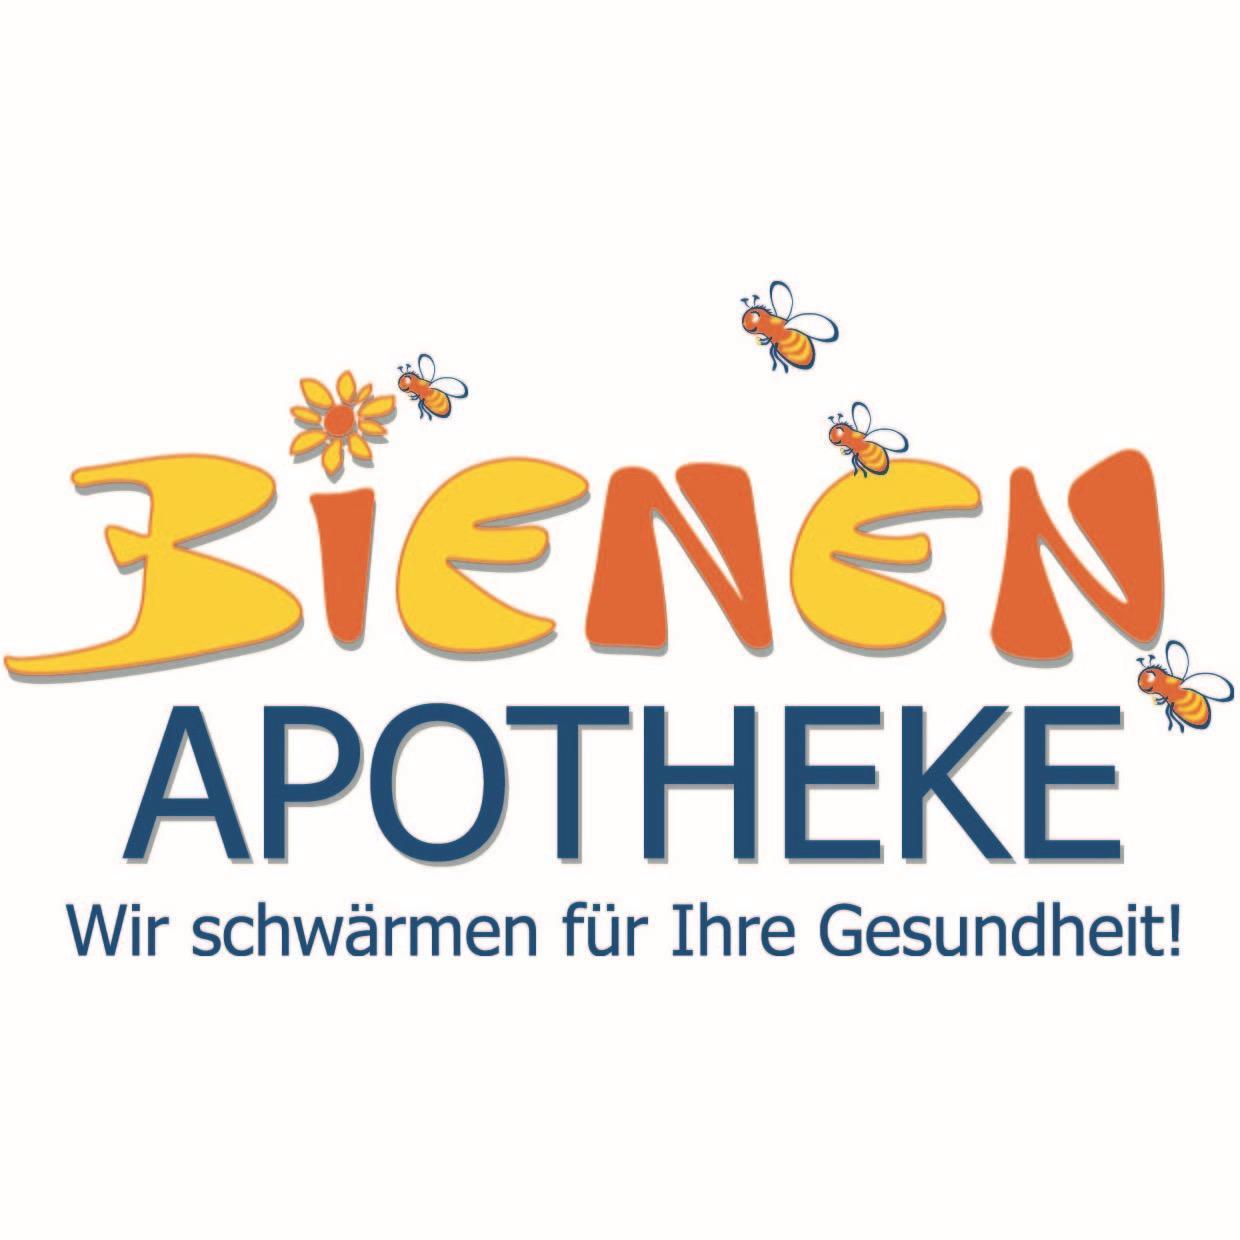 Bienen-Apotheke Unterhaching Logo